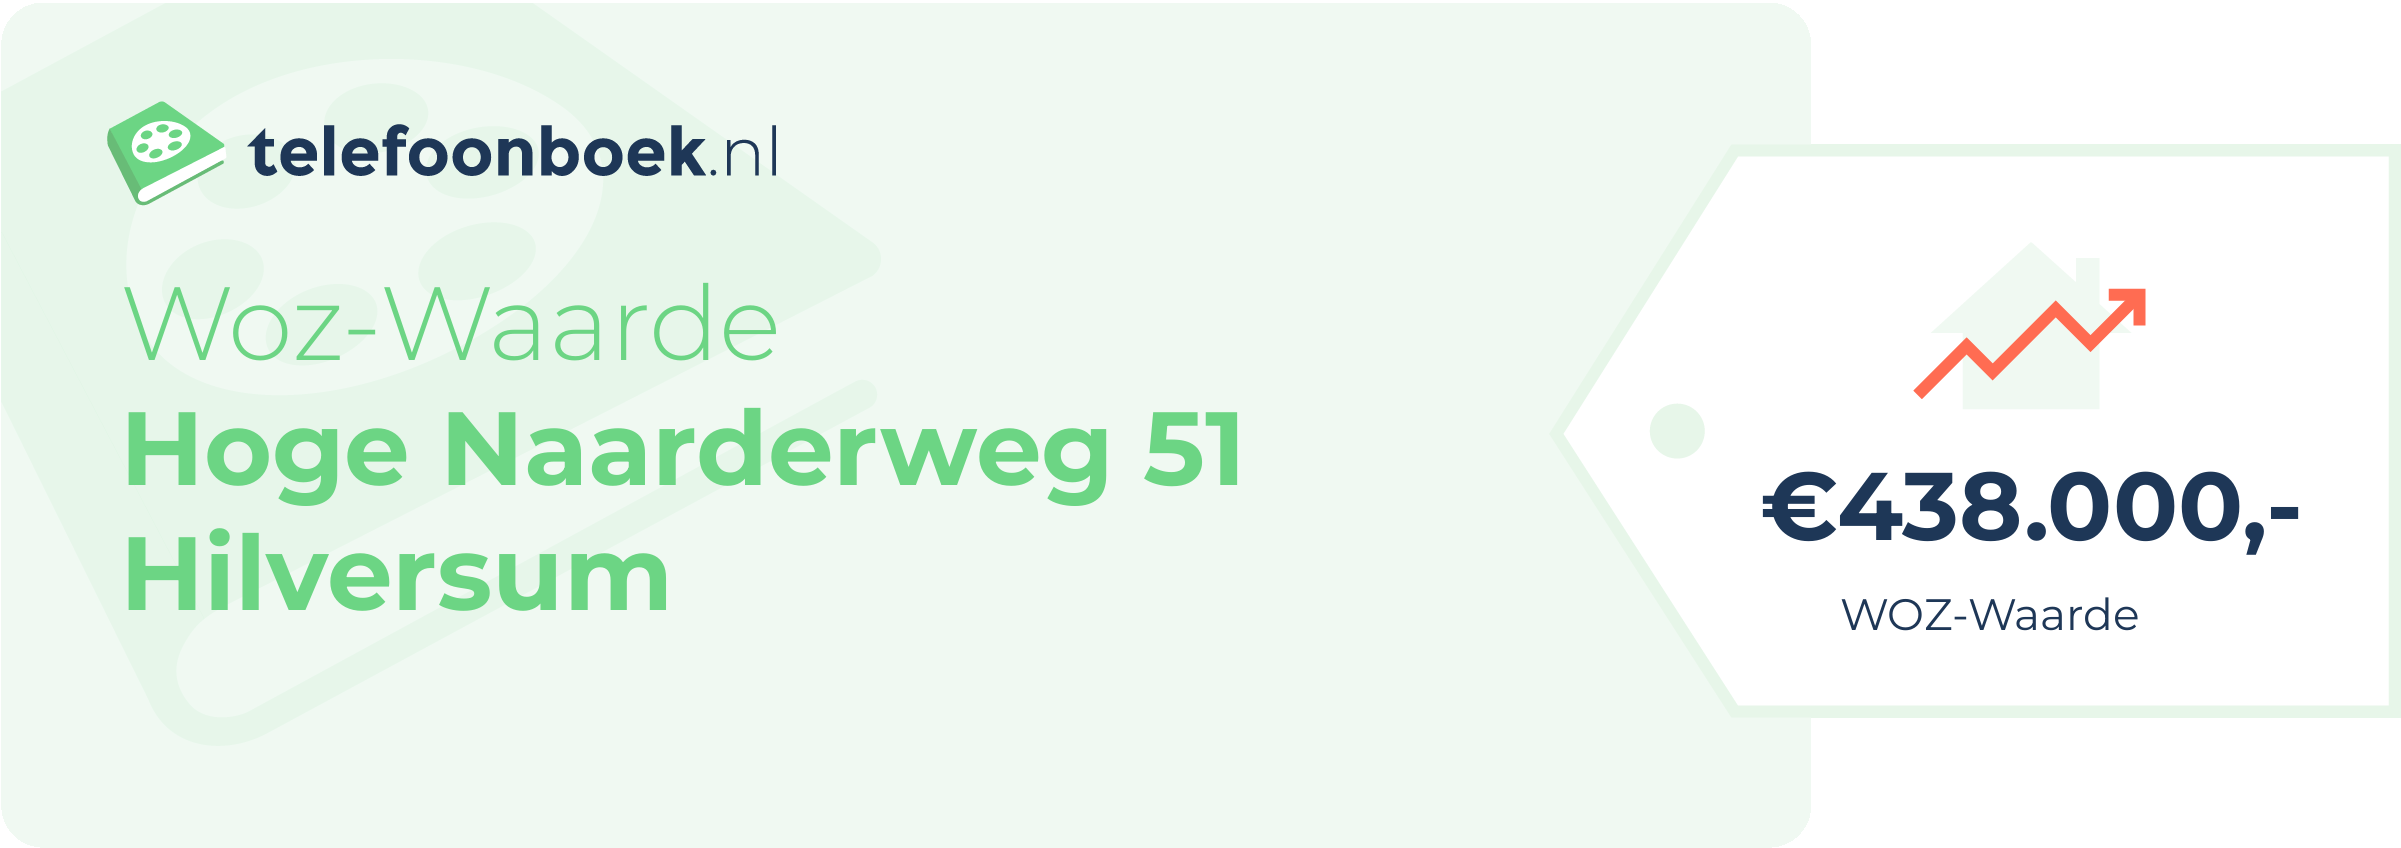 WOZ-waarde Hoge Naarderweg 51 Hilversum